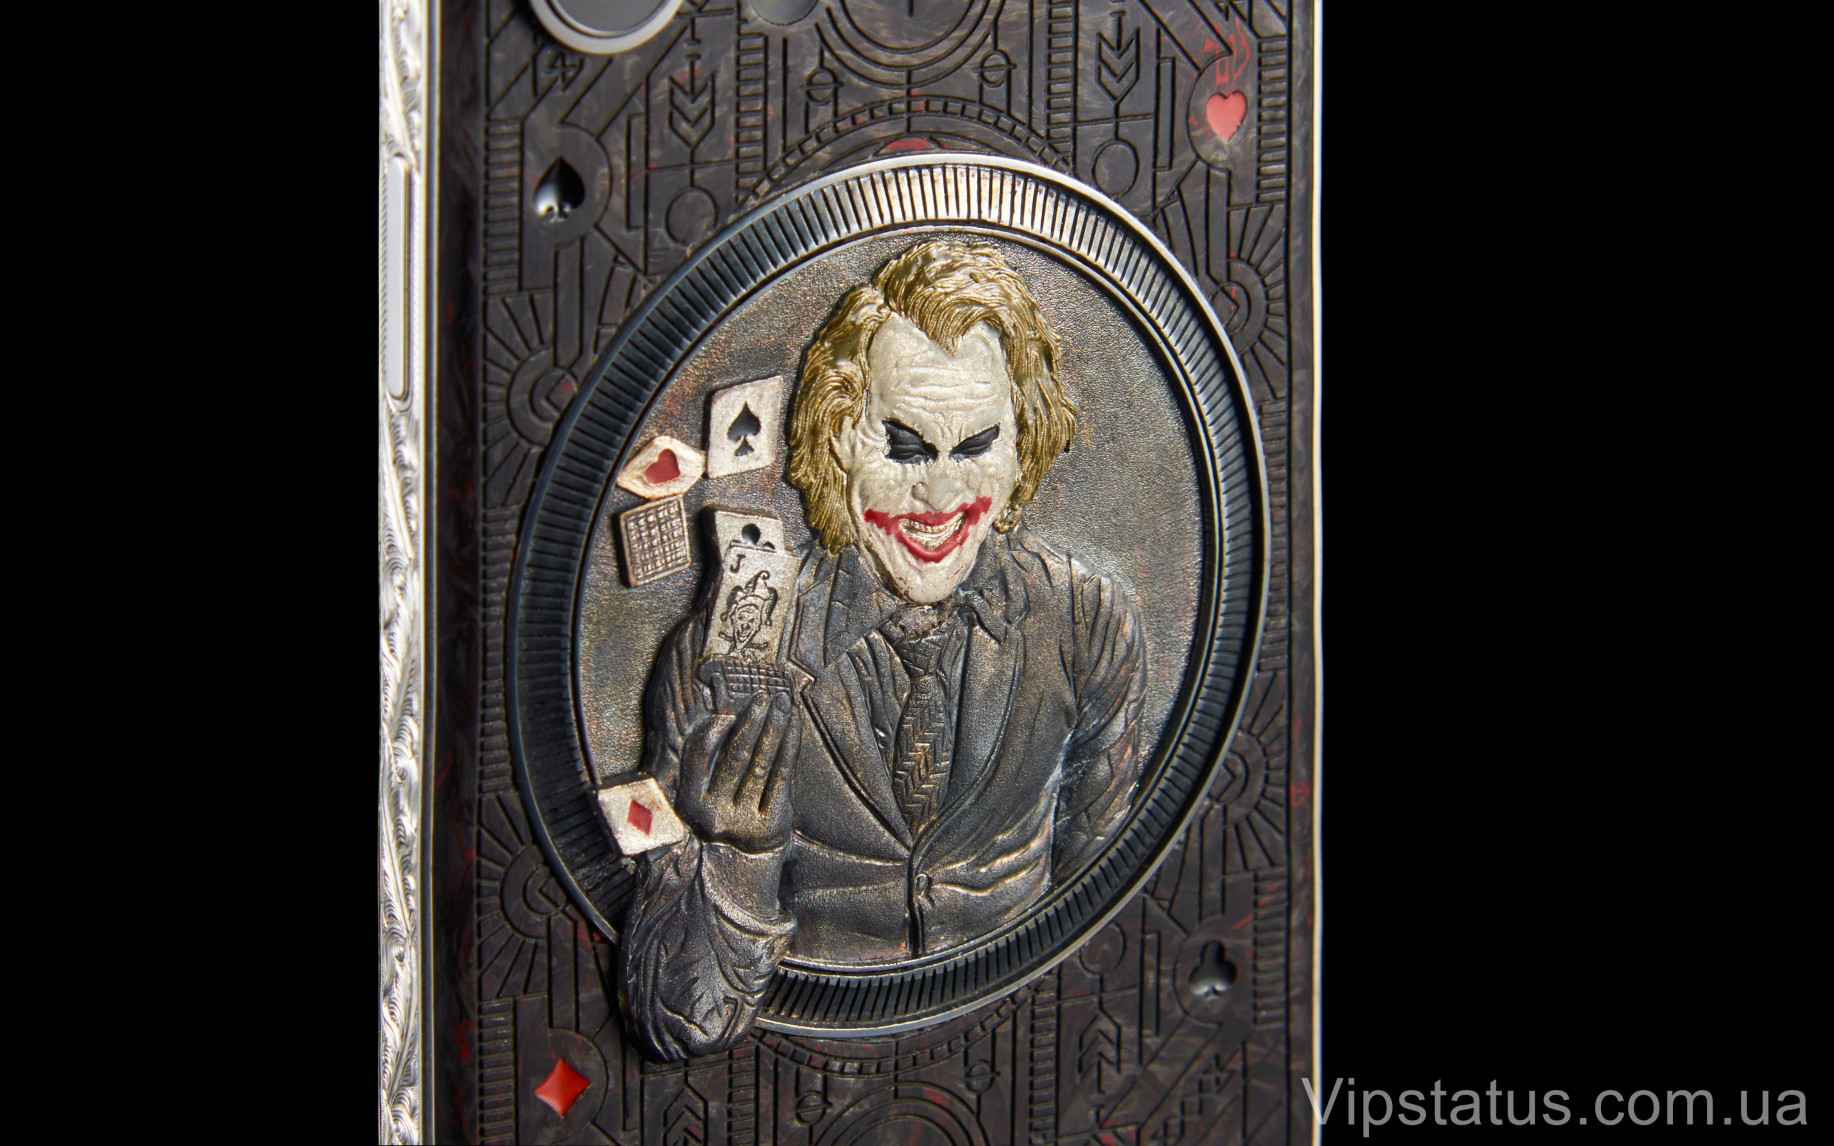 Elite Dark Joker IPHONE 12 PRO MAX 512 GB Dark Joker IPHONE 12 PRO MAX 512 GB image 4